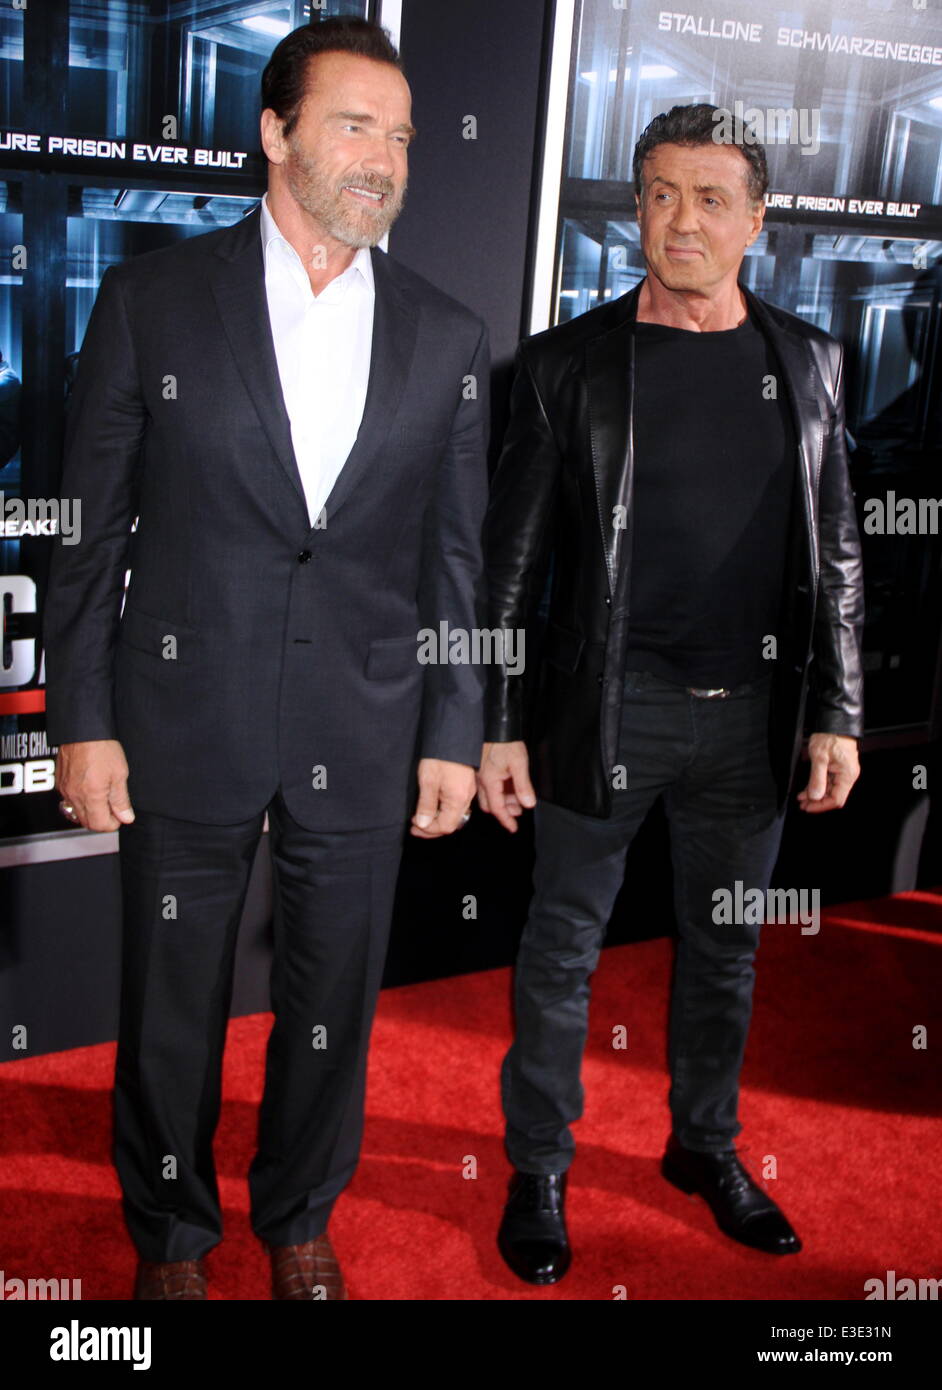 ¿Cuánto mide Arnold Schwarzenegger? - Altura - Real height New-york-movie-premiere-for-escape-plan-featured-are-amy-ryan-sylvesterstallone-E3E31N